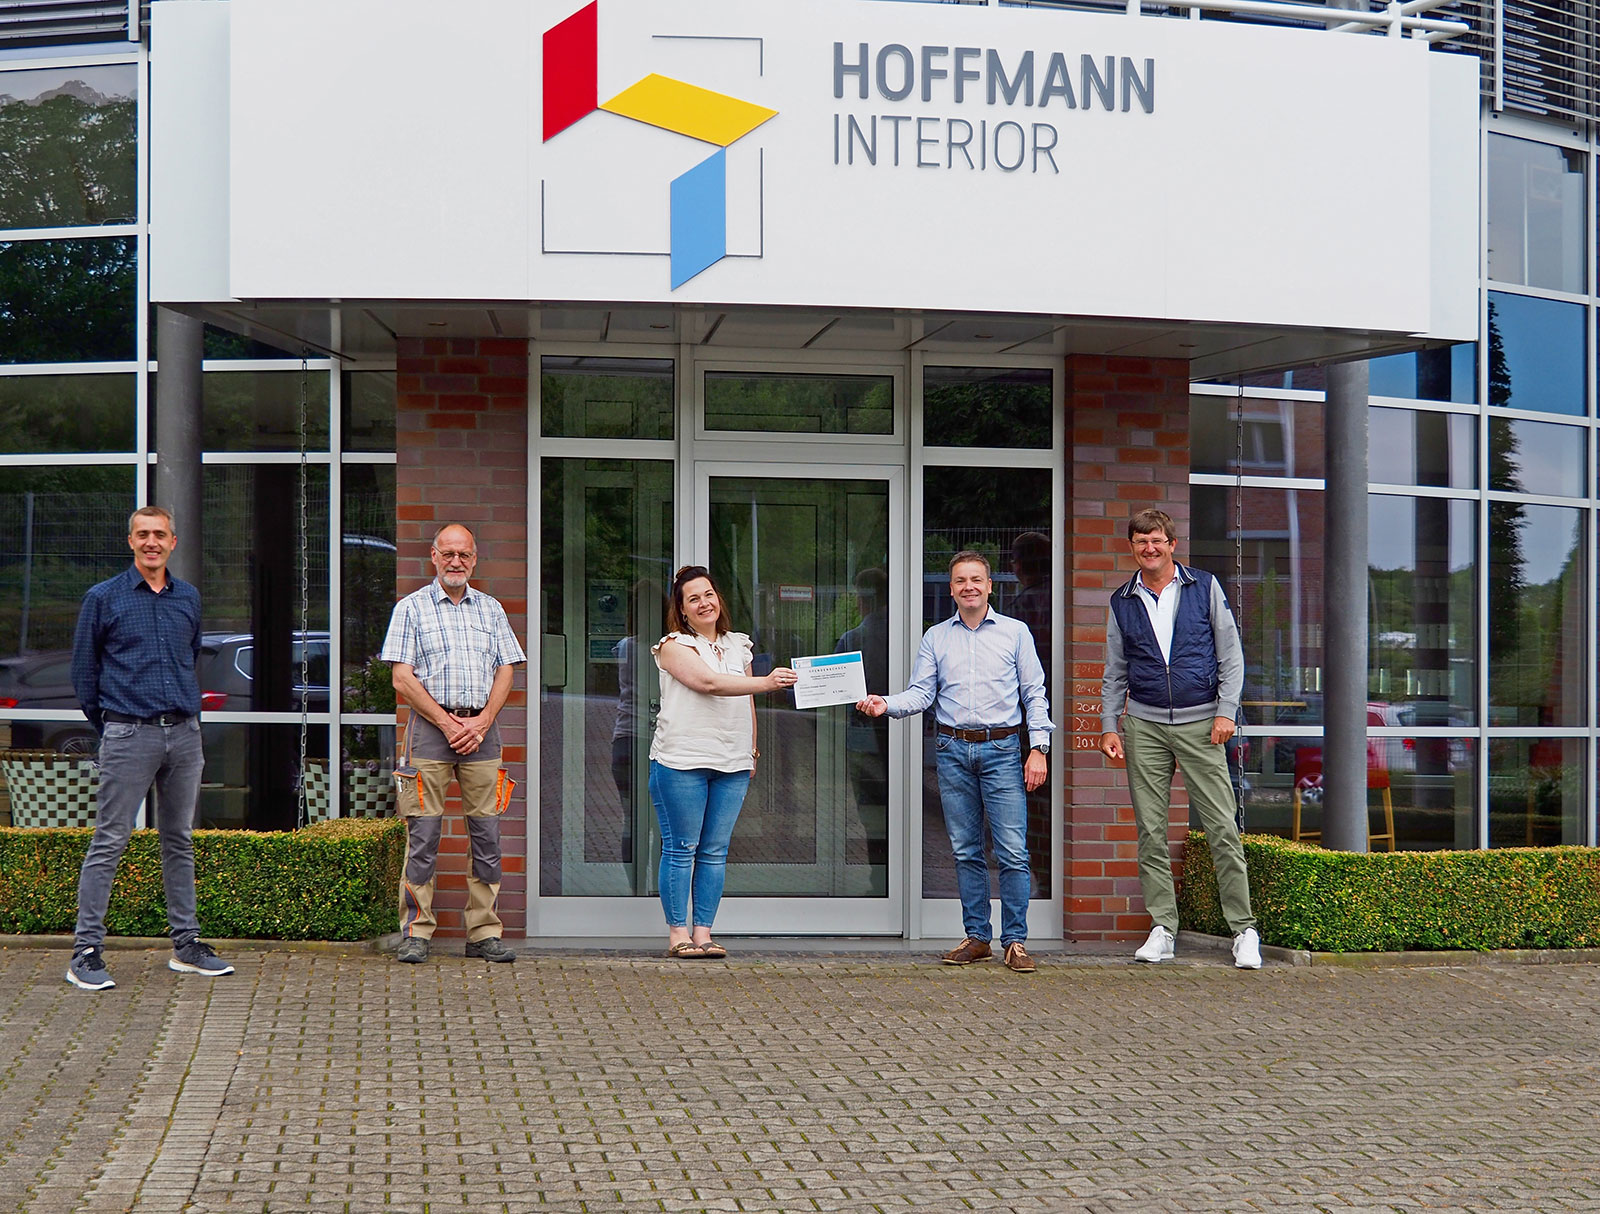 Hoffmann Interior presents €1,100 to the Elisabeth Hospice in Stadtlohn